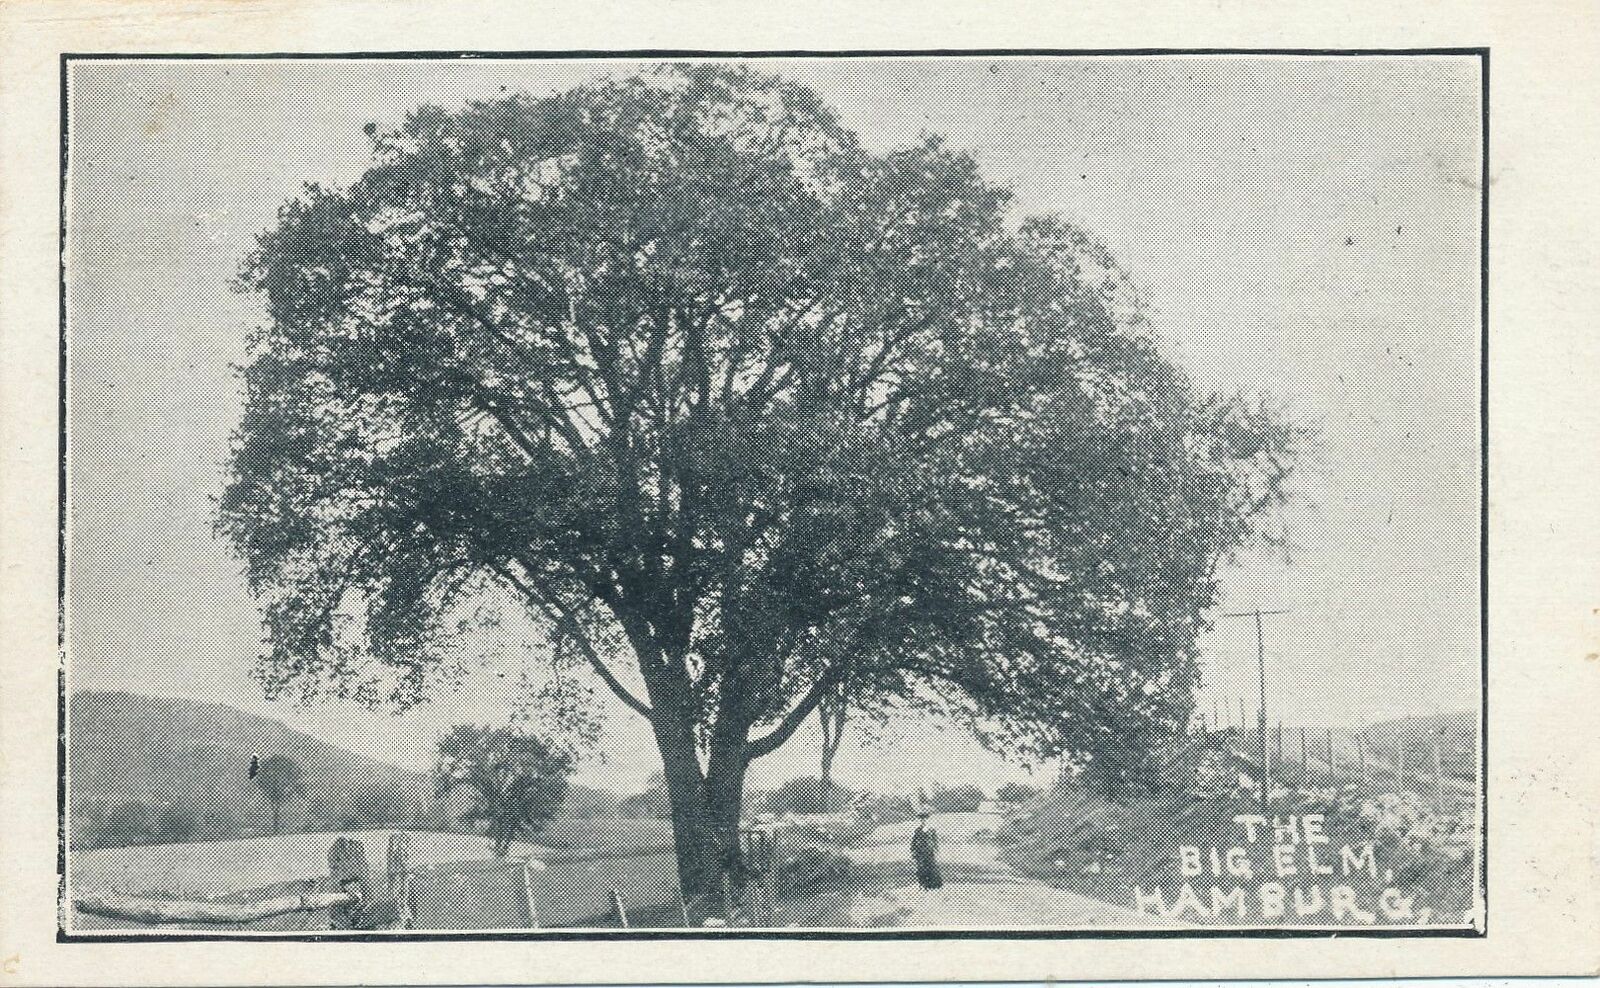 HAMBURG NJ - The Big Elm - udb (pre 1908)